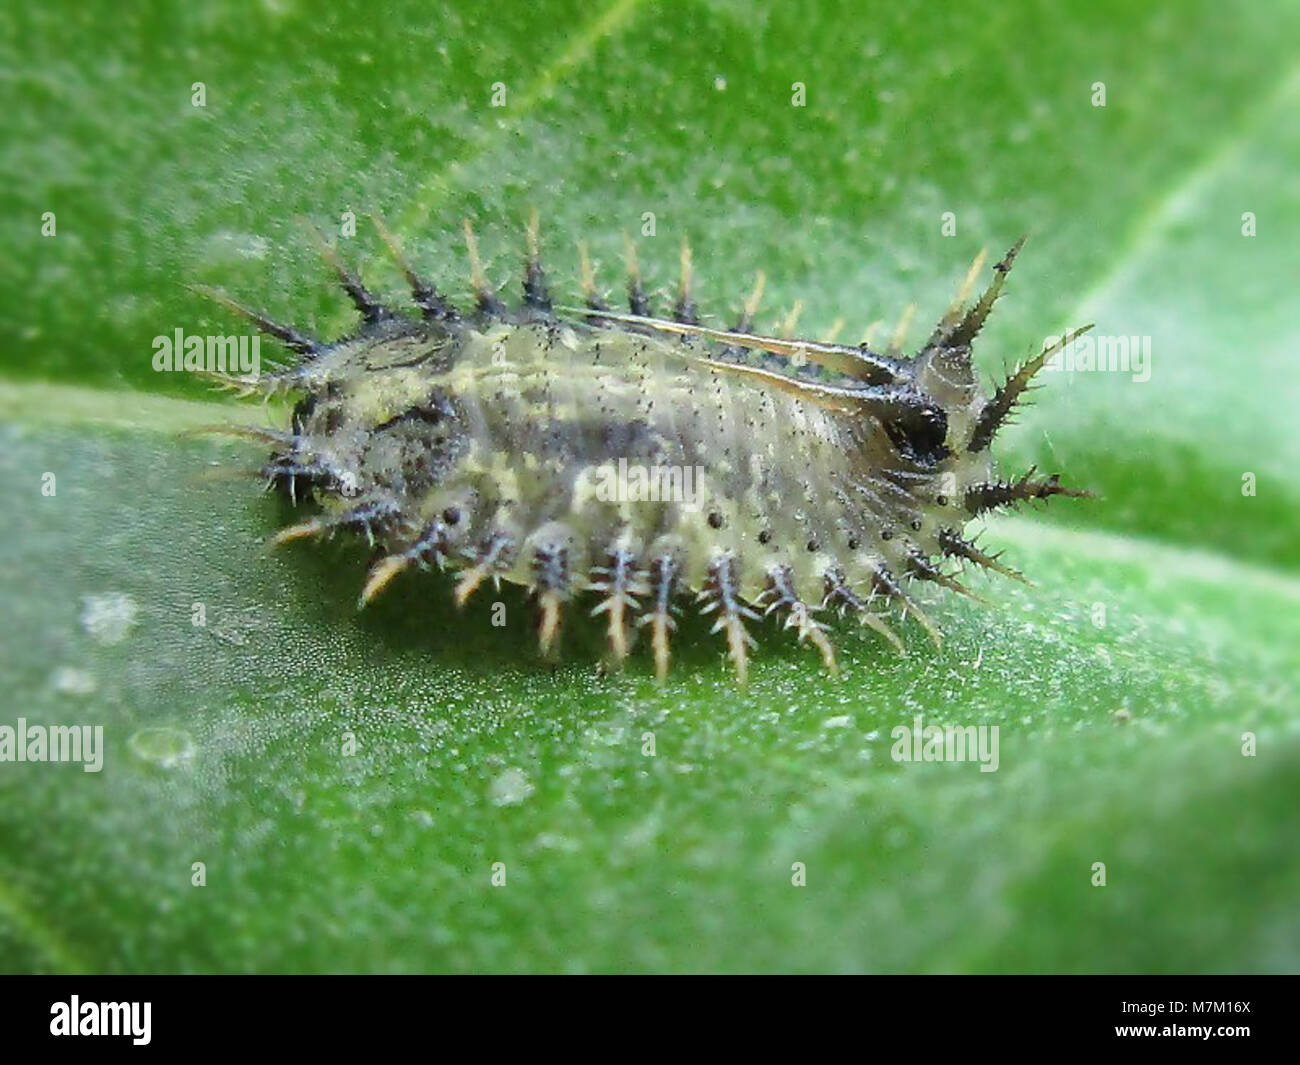 Cassida spec. (Coleoptera sp.) larva, Elst (Gld), the Netherlands - 2 Stock Photo